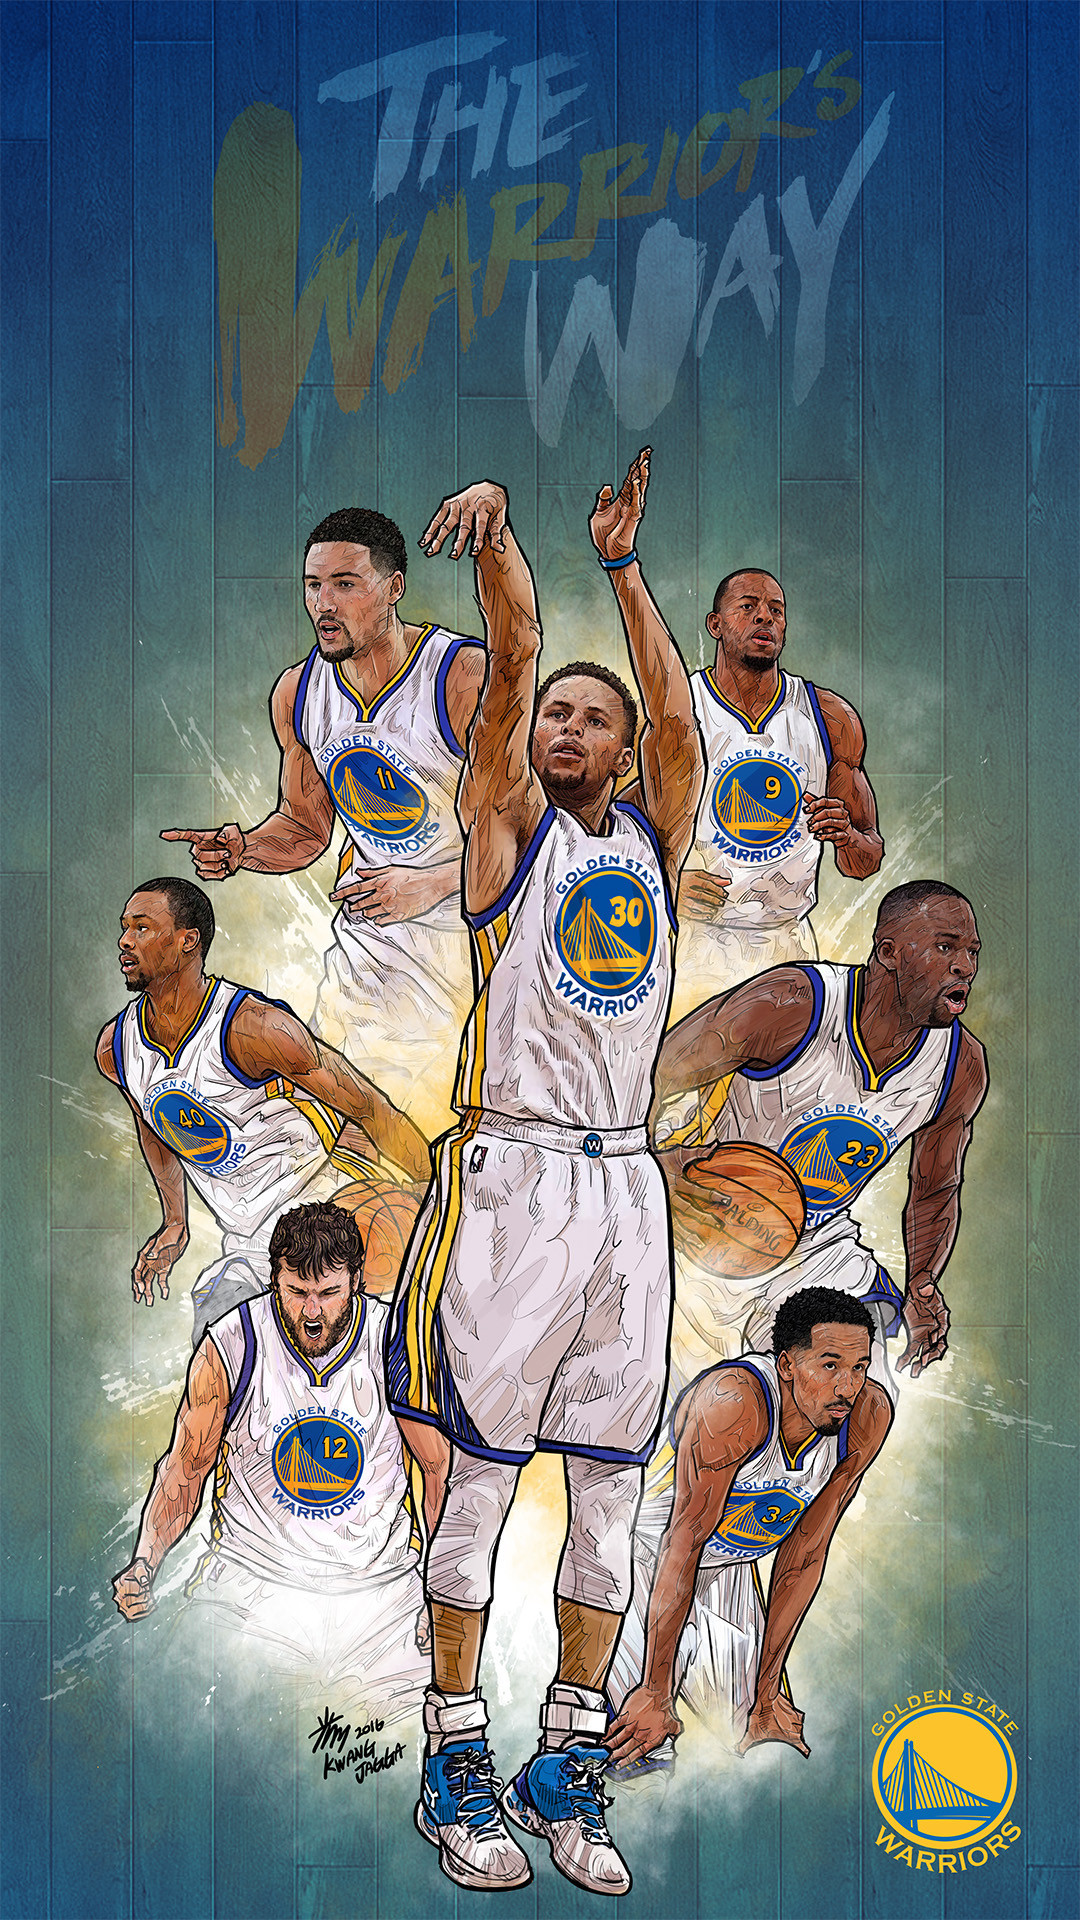 stephen curry wallpaper on Twitter Download Free Golden State Warriors  Stephen Curry Wallpaper  httpstcoIDpBln1oRd httpstco9Fx7iXtsLt   Twitter